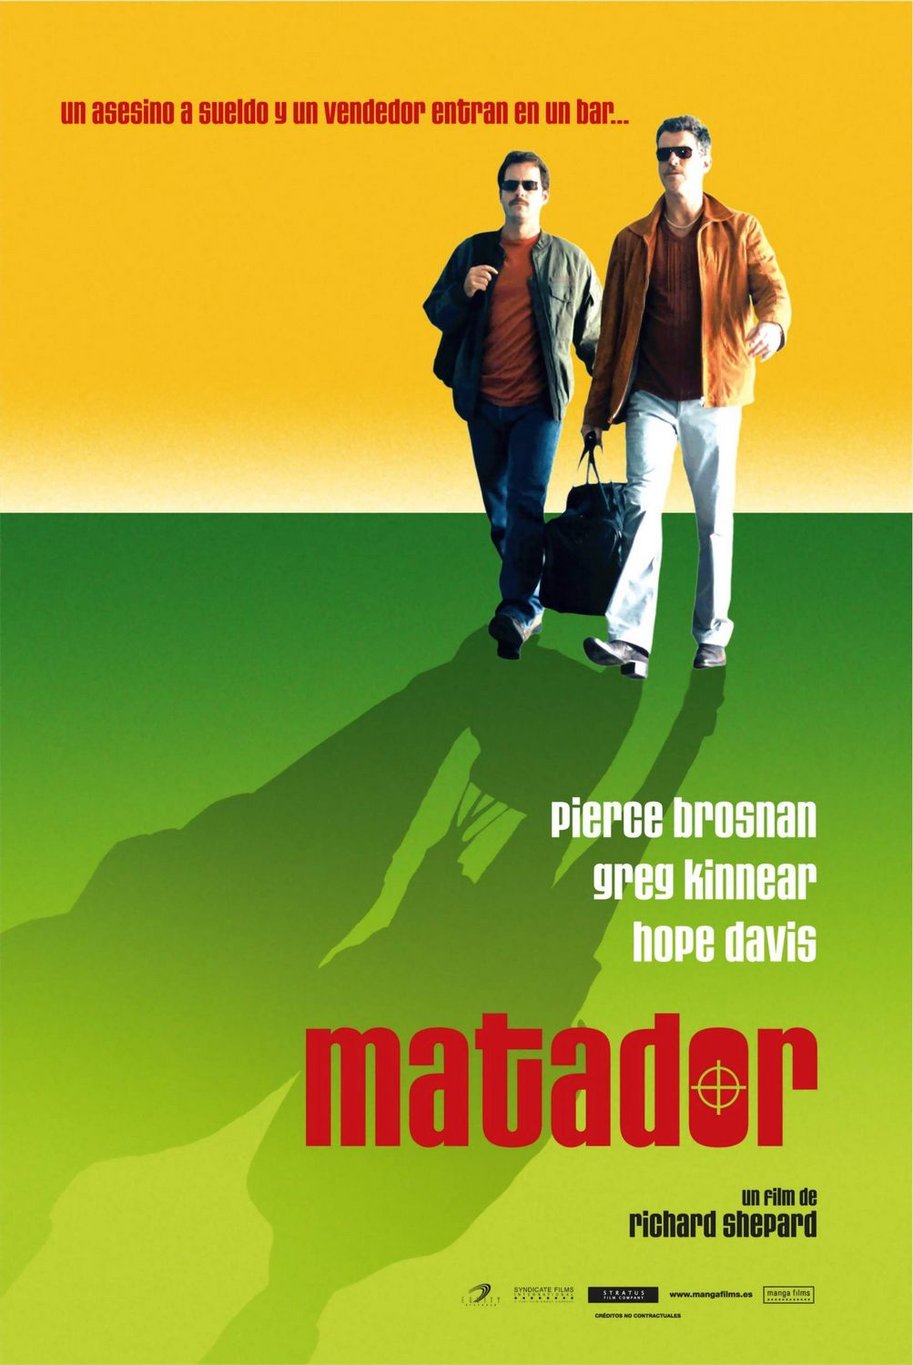 The Best Movie You Never Saw: The Matador